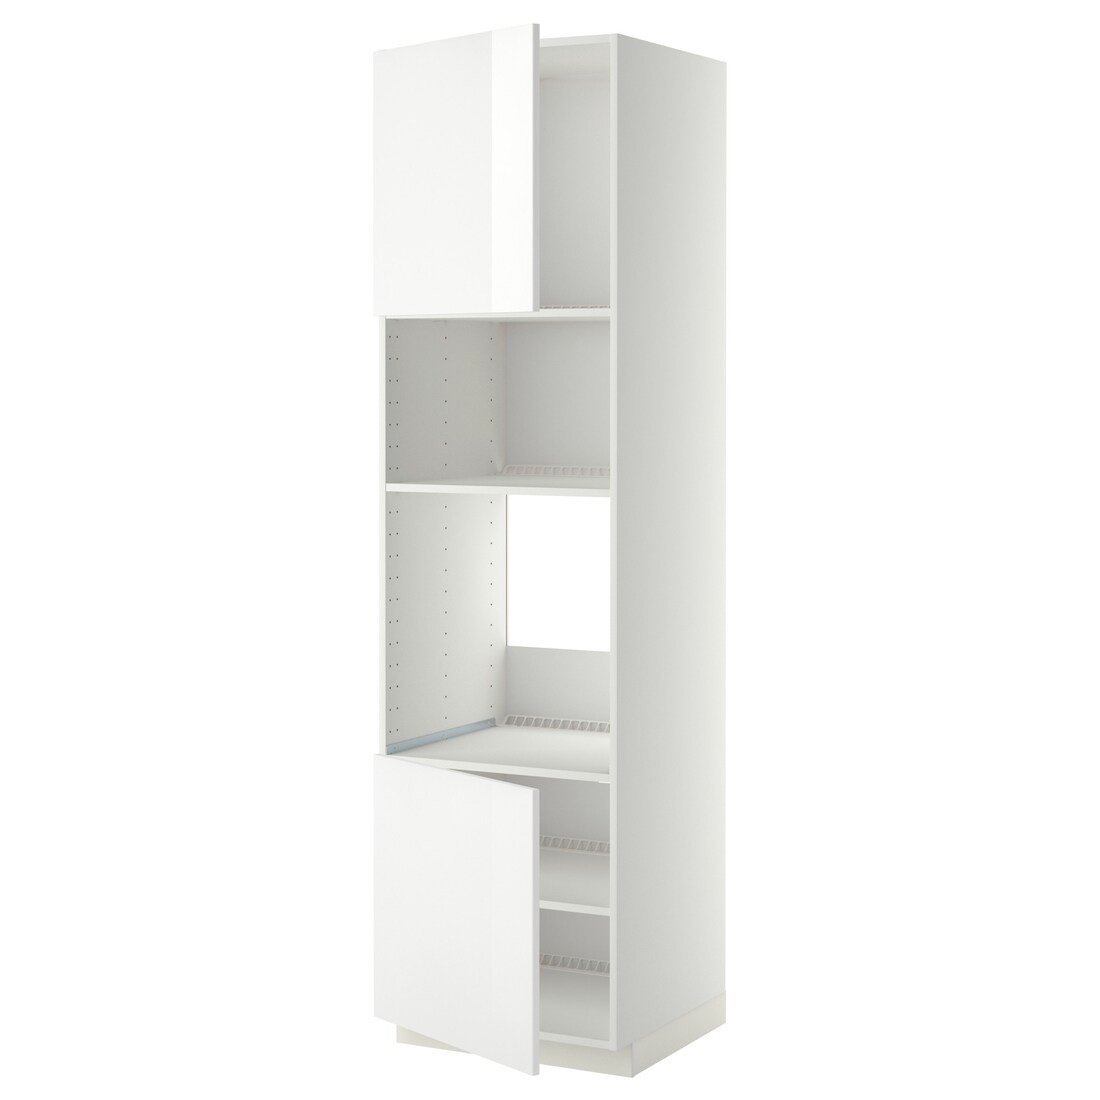 IKEA METOD МЕТОД Высокий шкаф для духовки / СВЧ, белый / Ringhult белый, 60x60x220 см 49458200 | 494.582.00